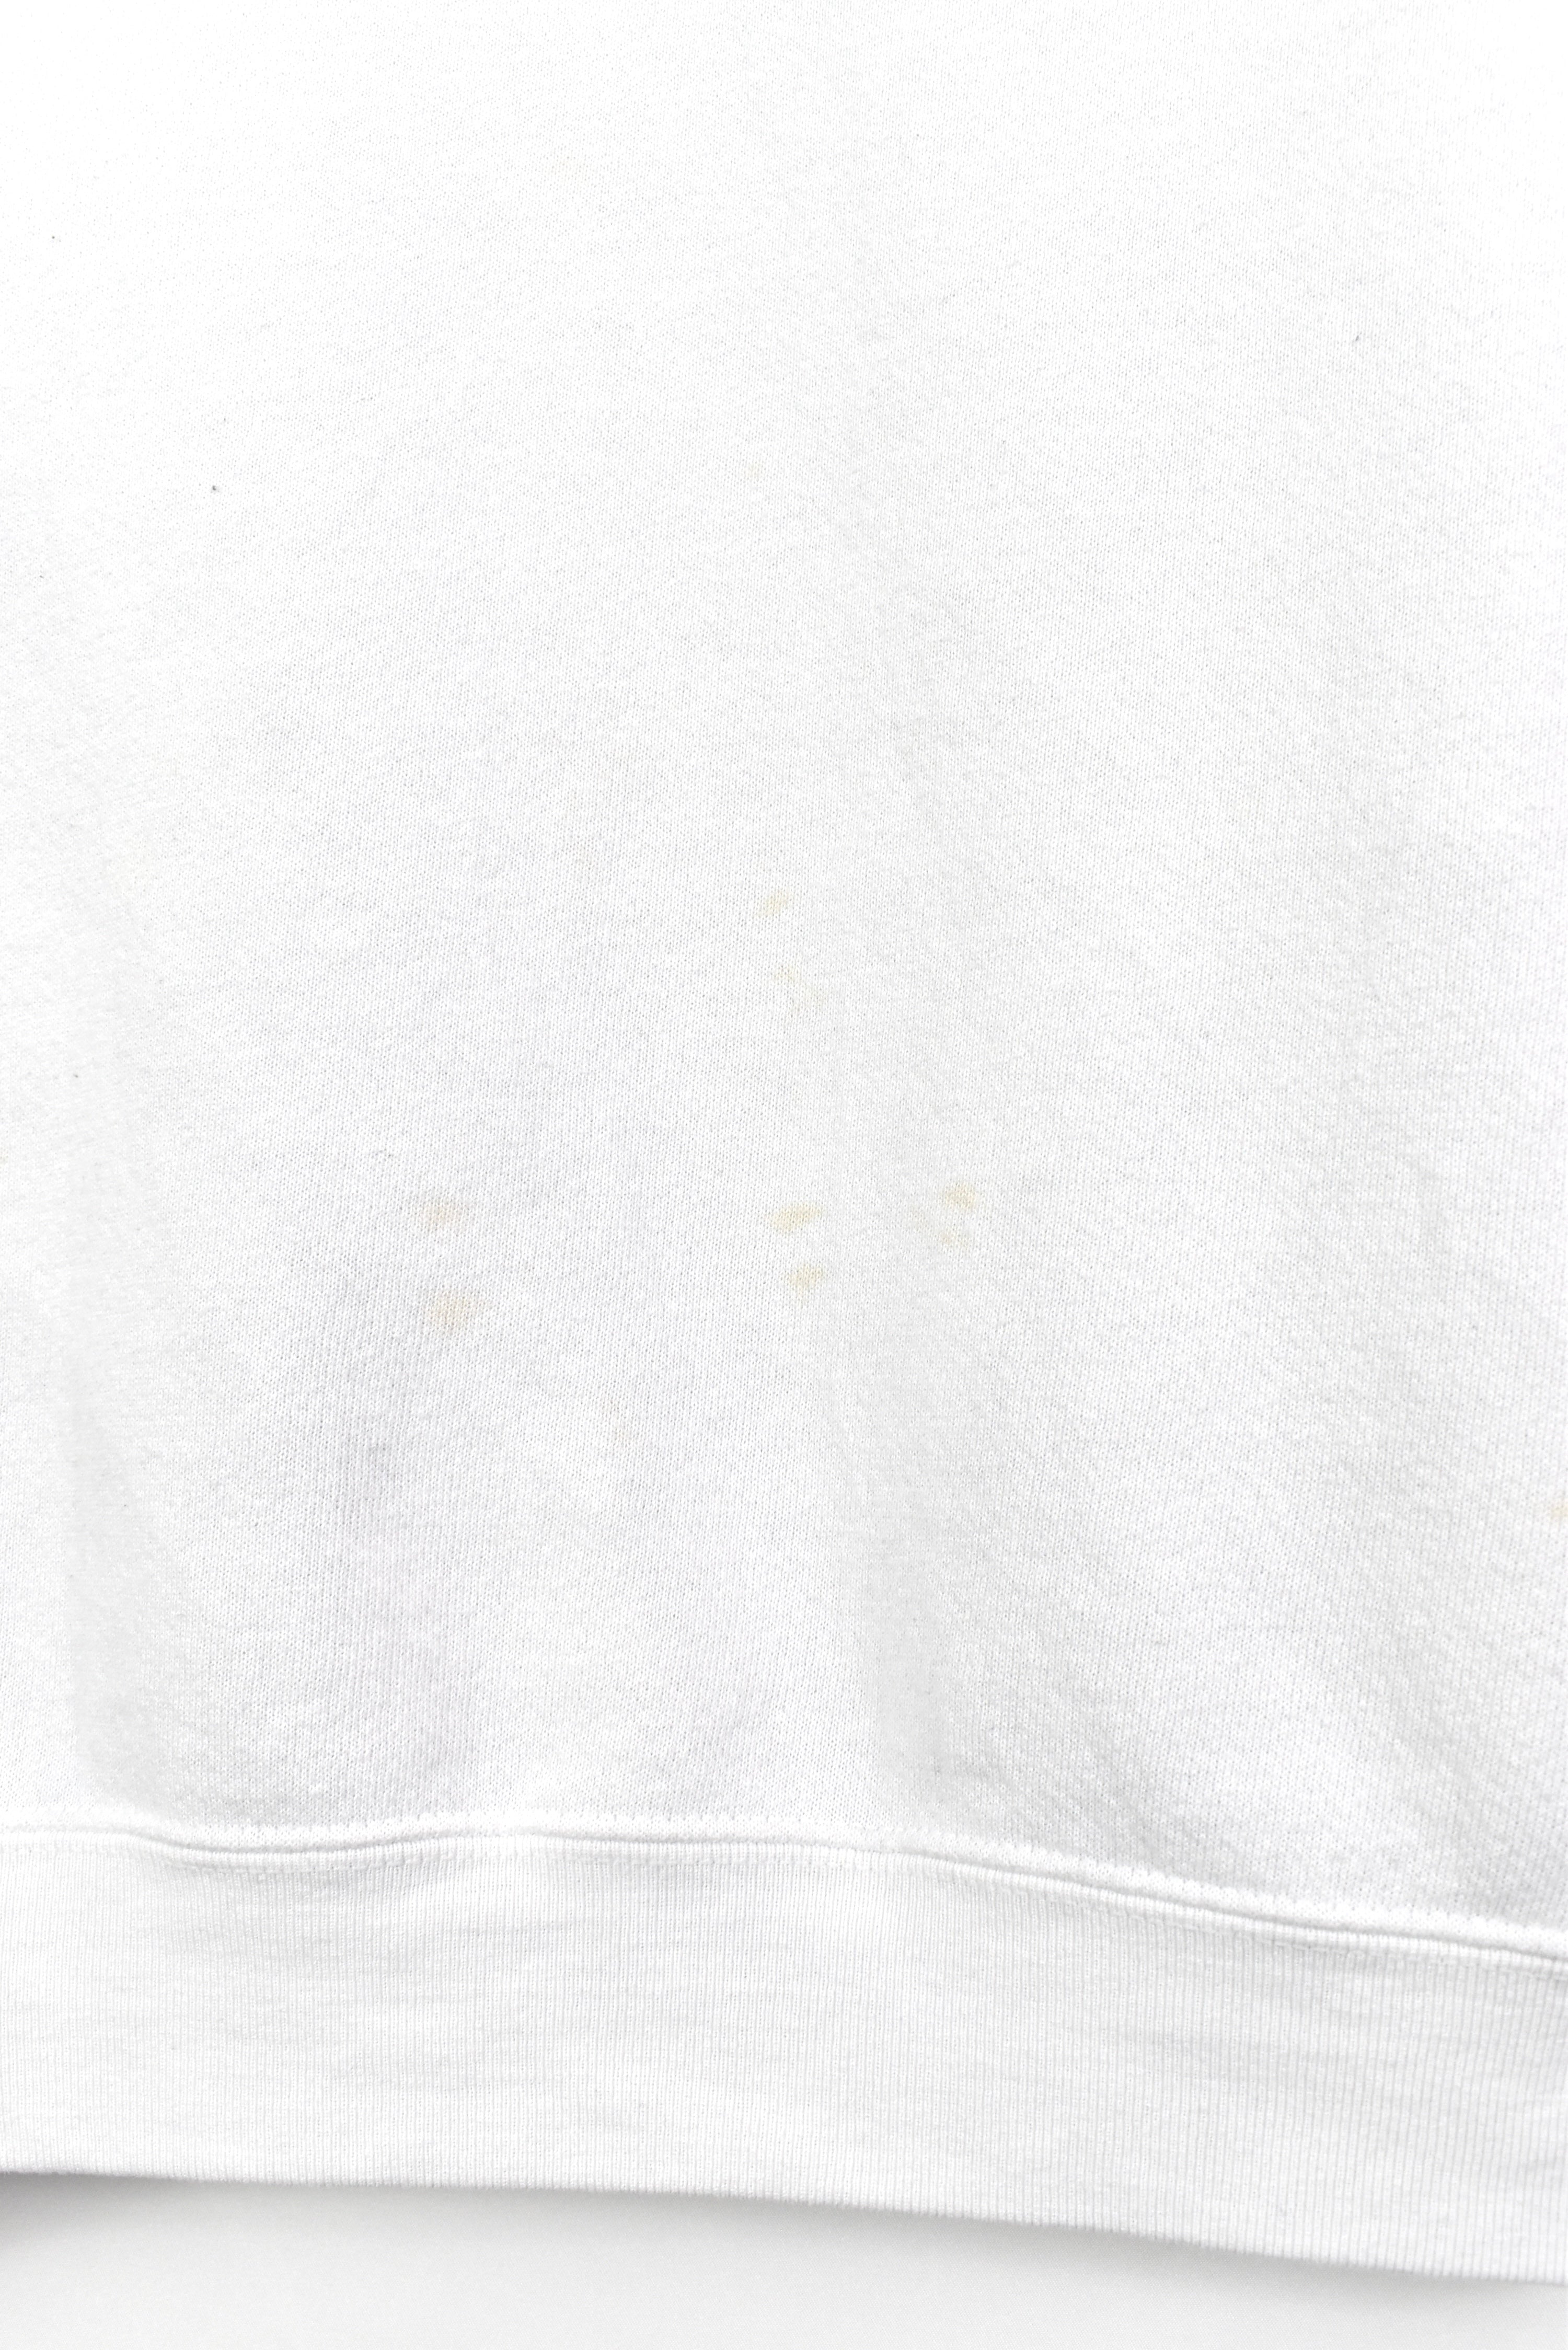 Vintage Pittsburgh Steelers sweatshirt, NFL white embroidered crewneck - AU Large PRO SPORT